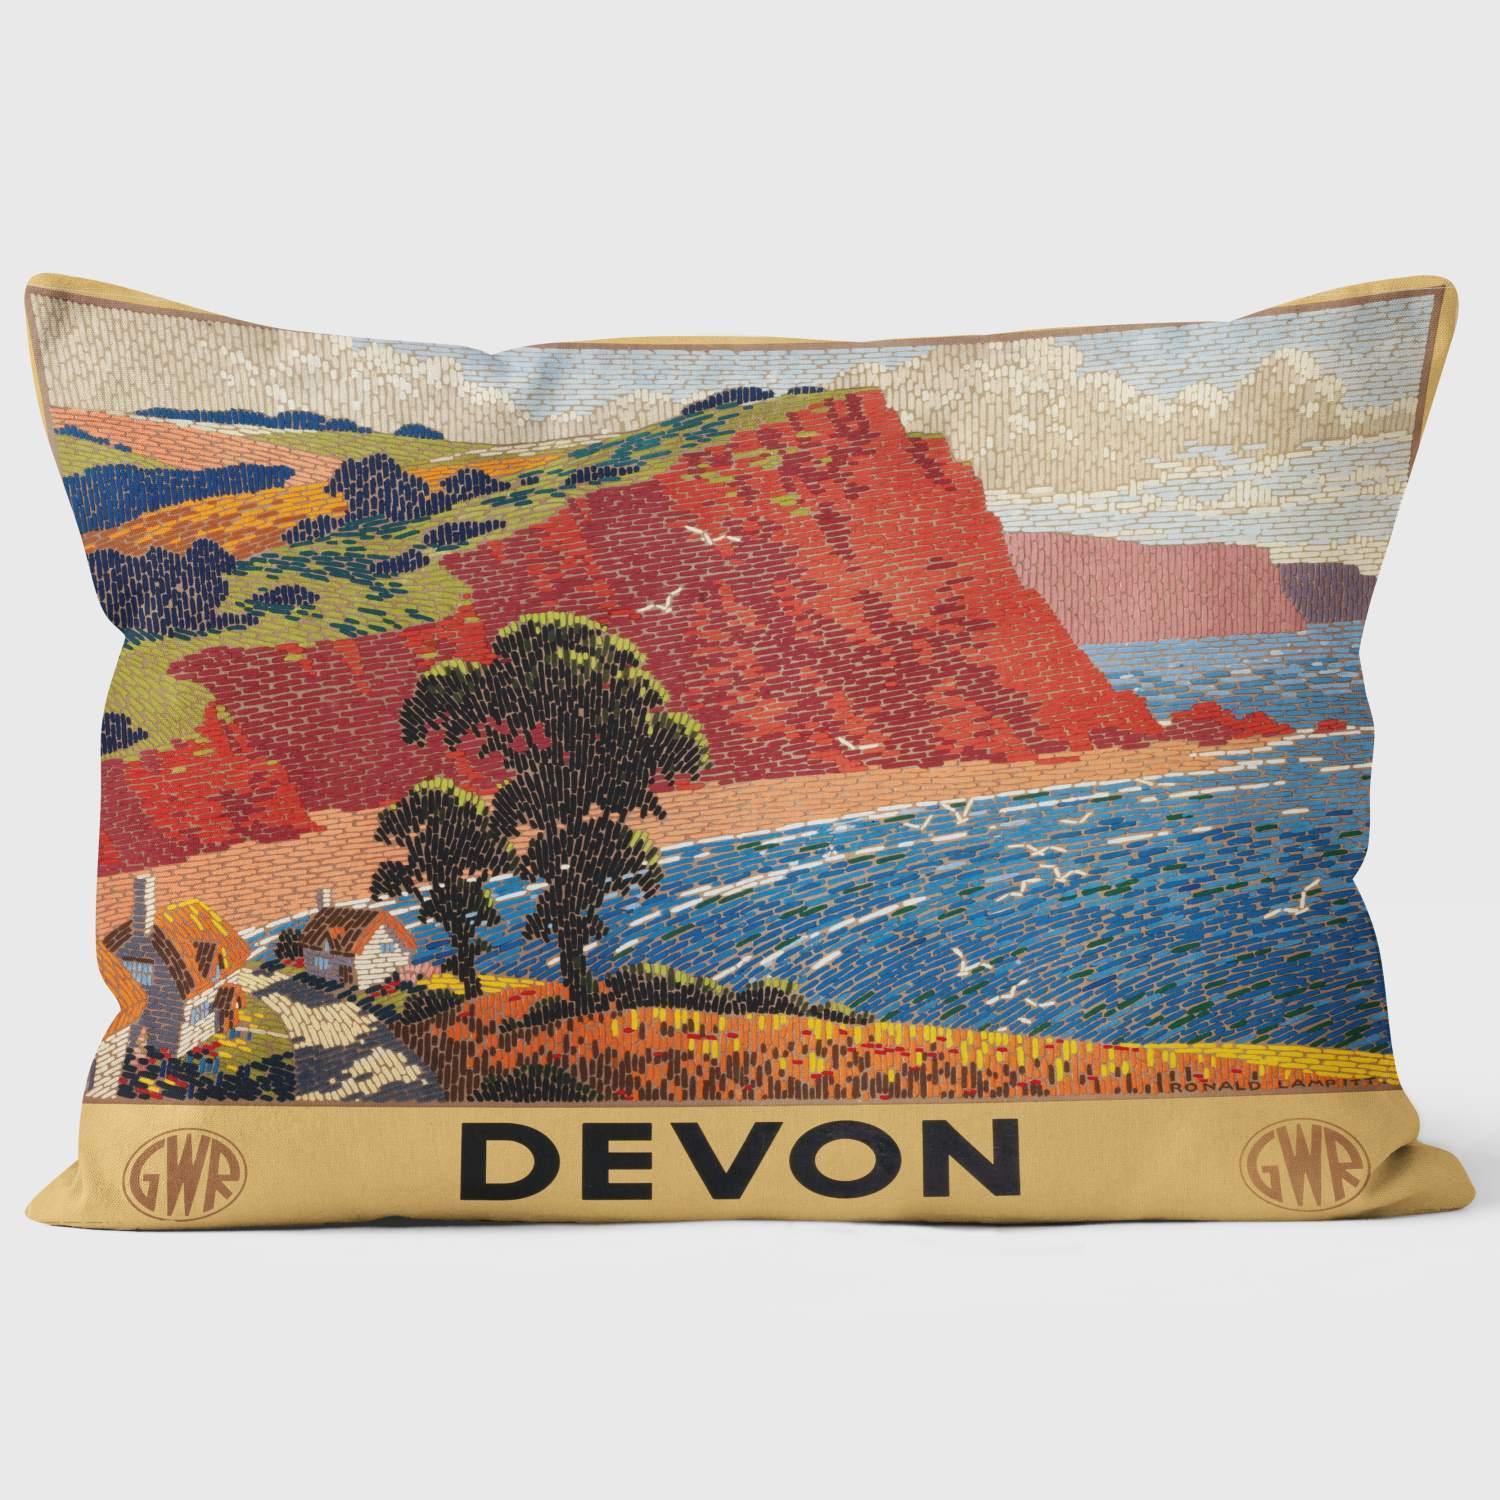 Devon GWR 1936 - National Railway Museum Cushion - Handmade Cushions UK - WeLoveCushions